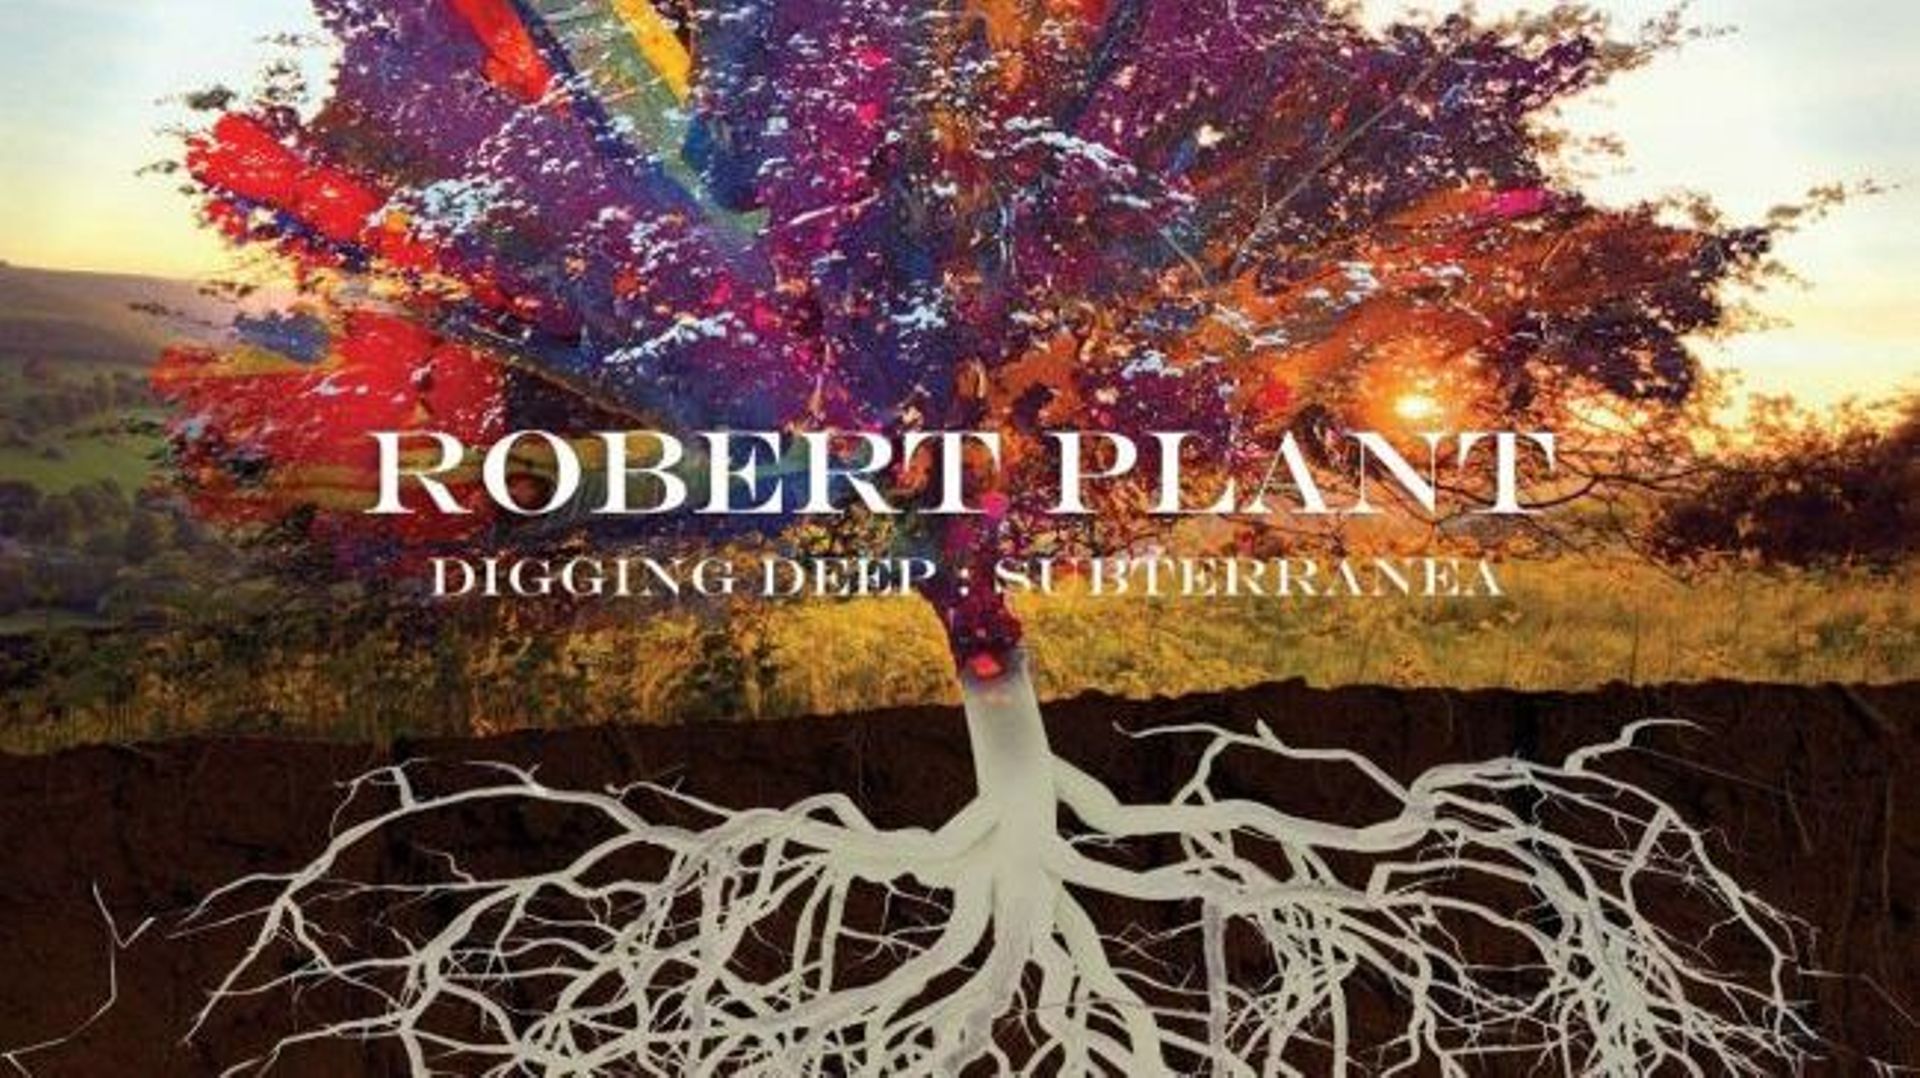 Robert Plant partage un classique rockabilly